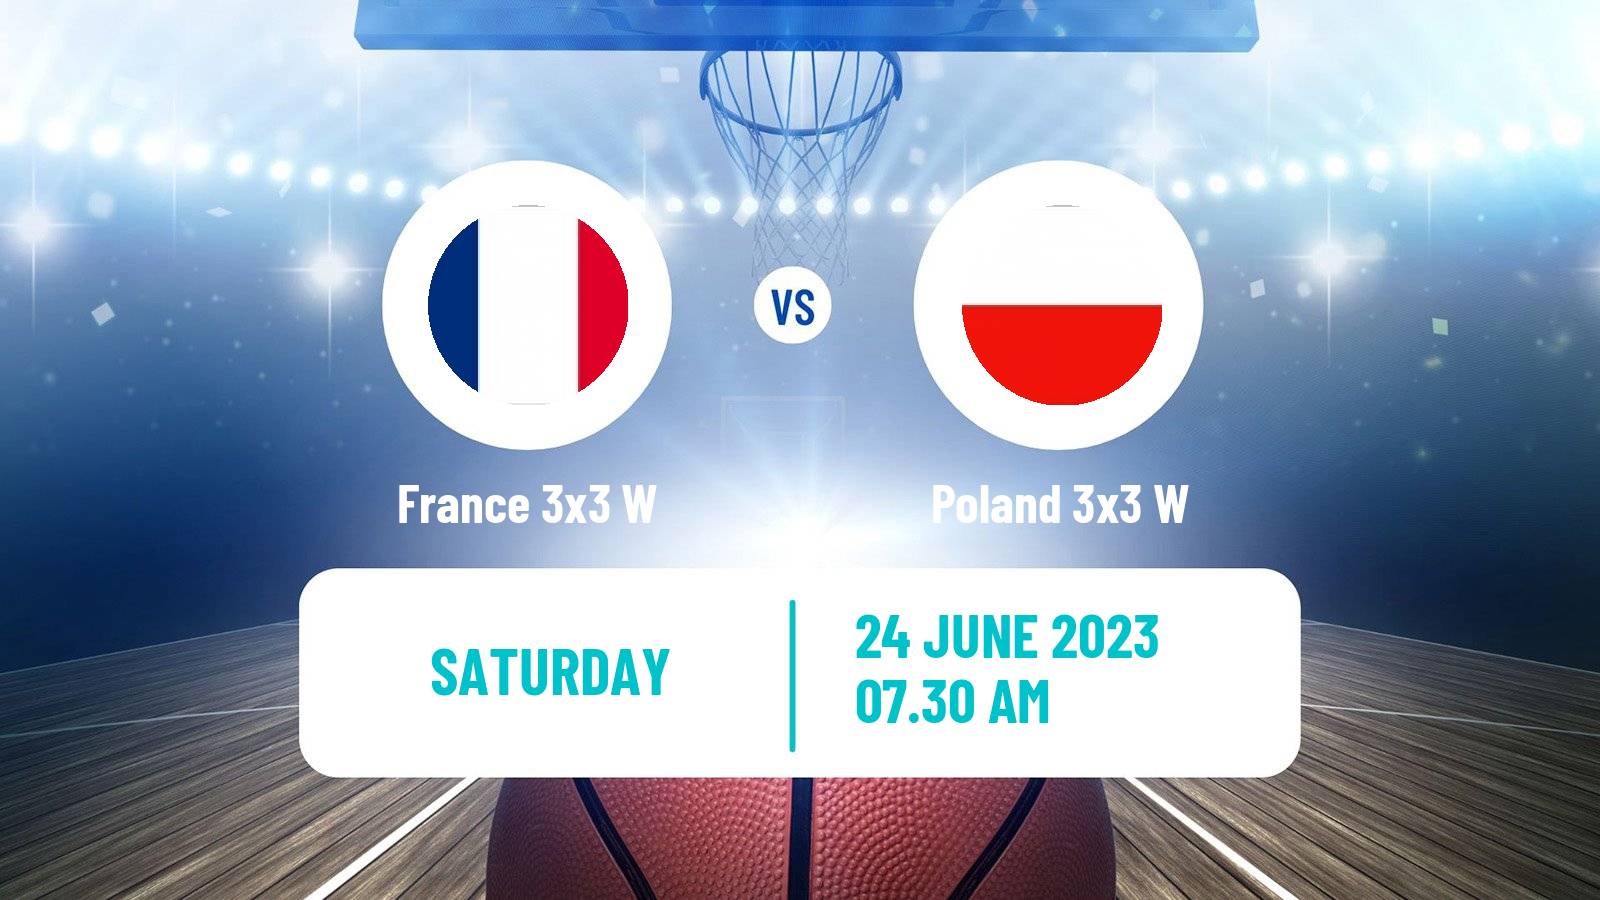 Basketball European Games 3x3 Women France 3x3 W - Poland 3x3 W